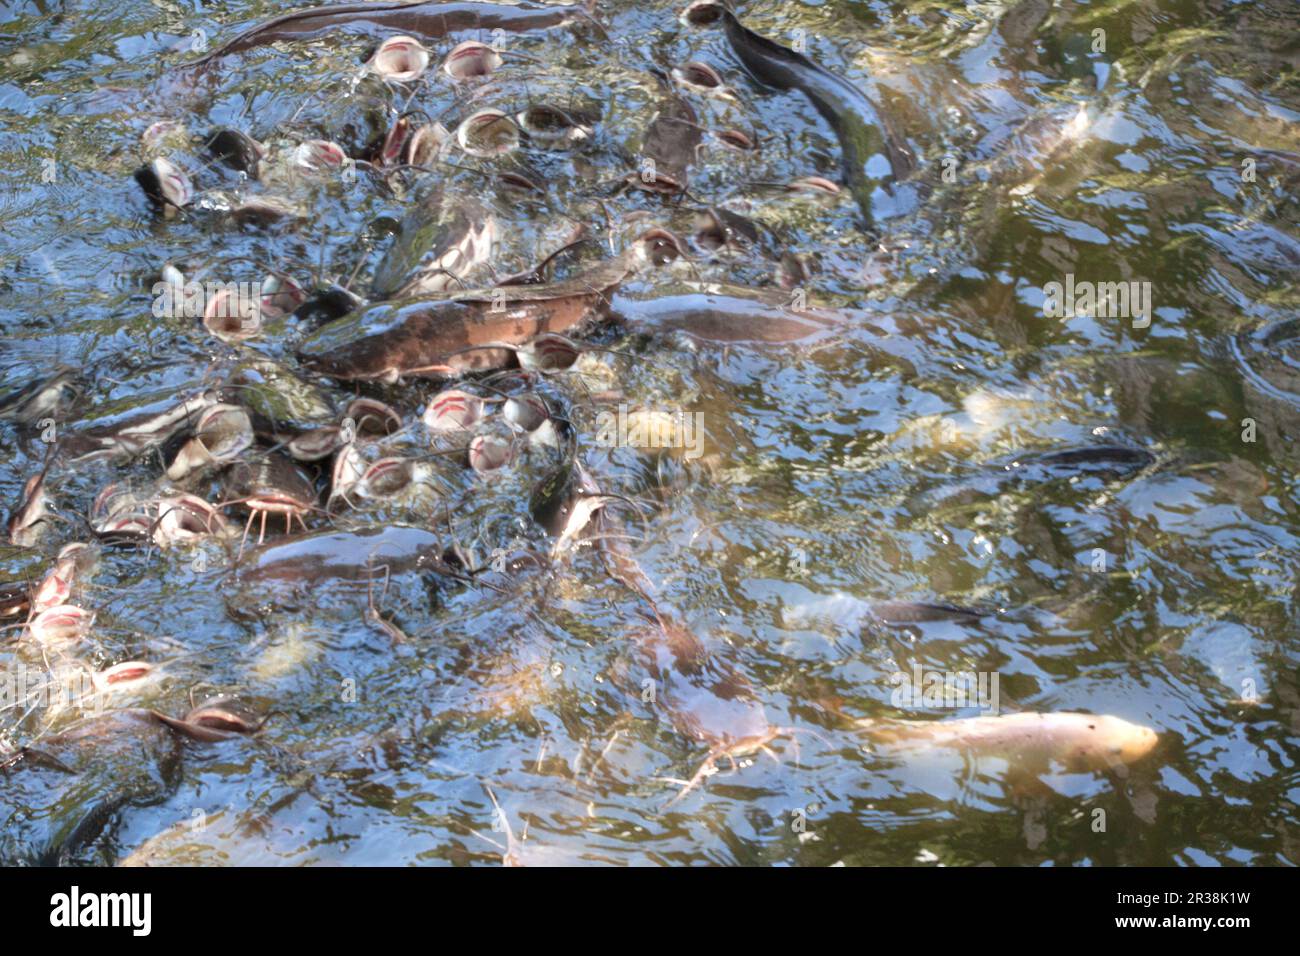 Catfish in pond Stock Photo